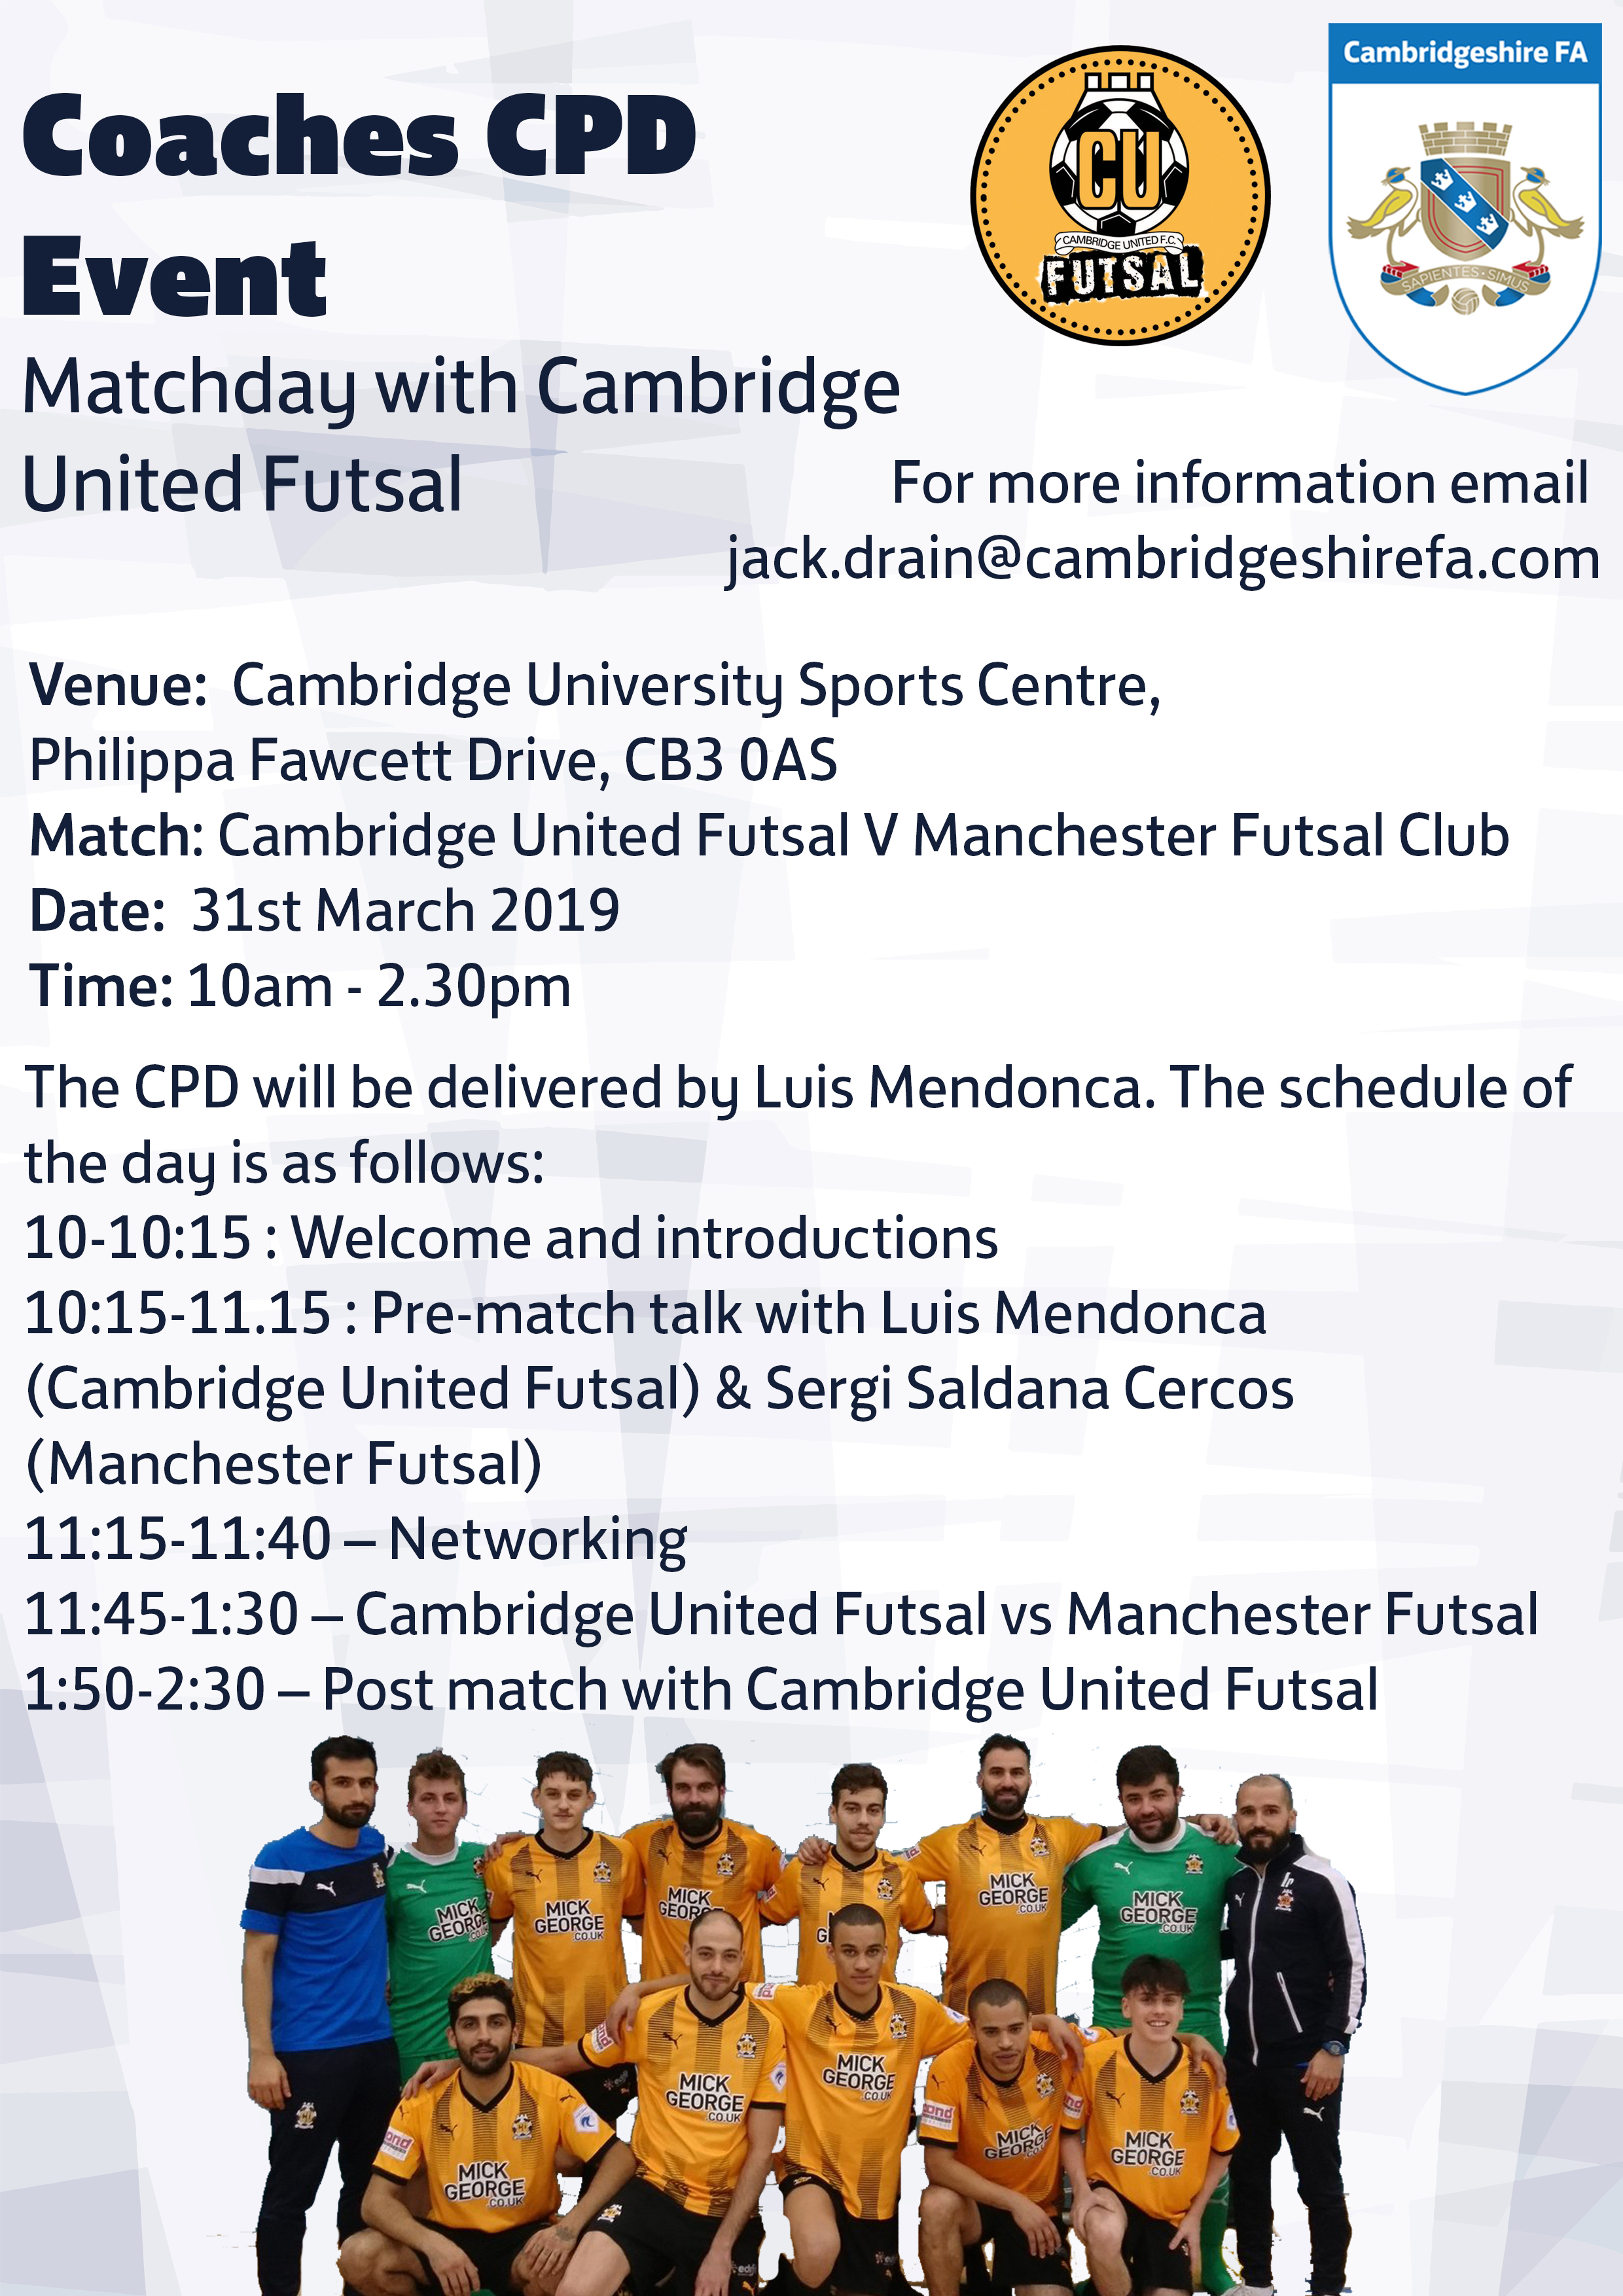 Cambridge United Futsal CPD event